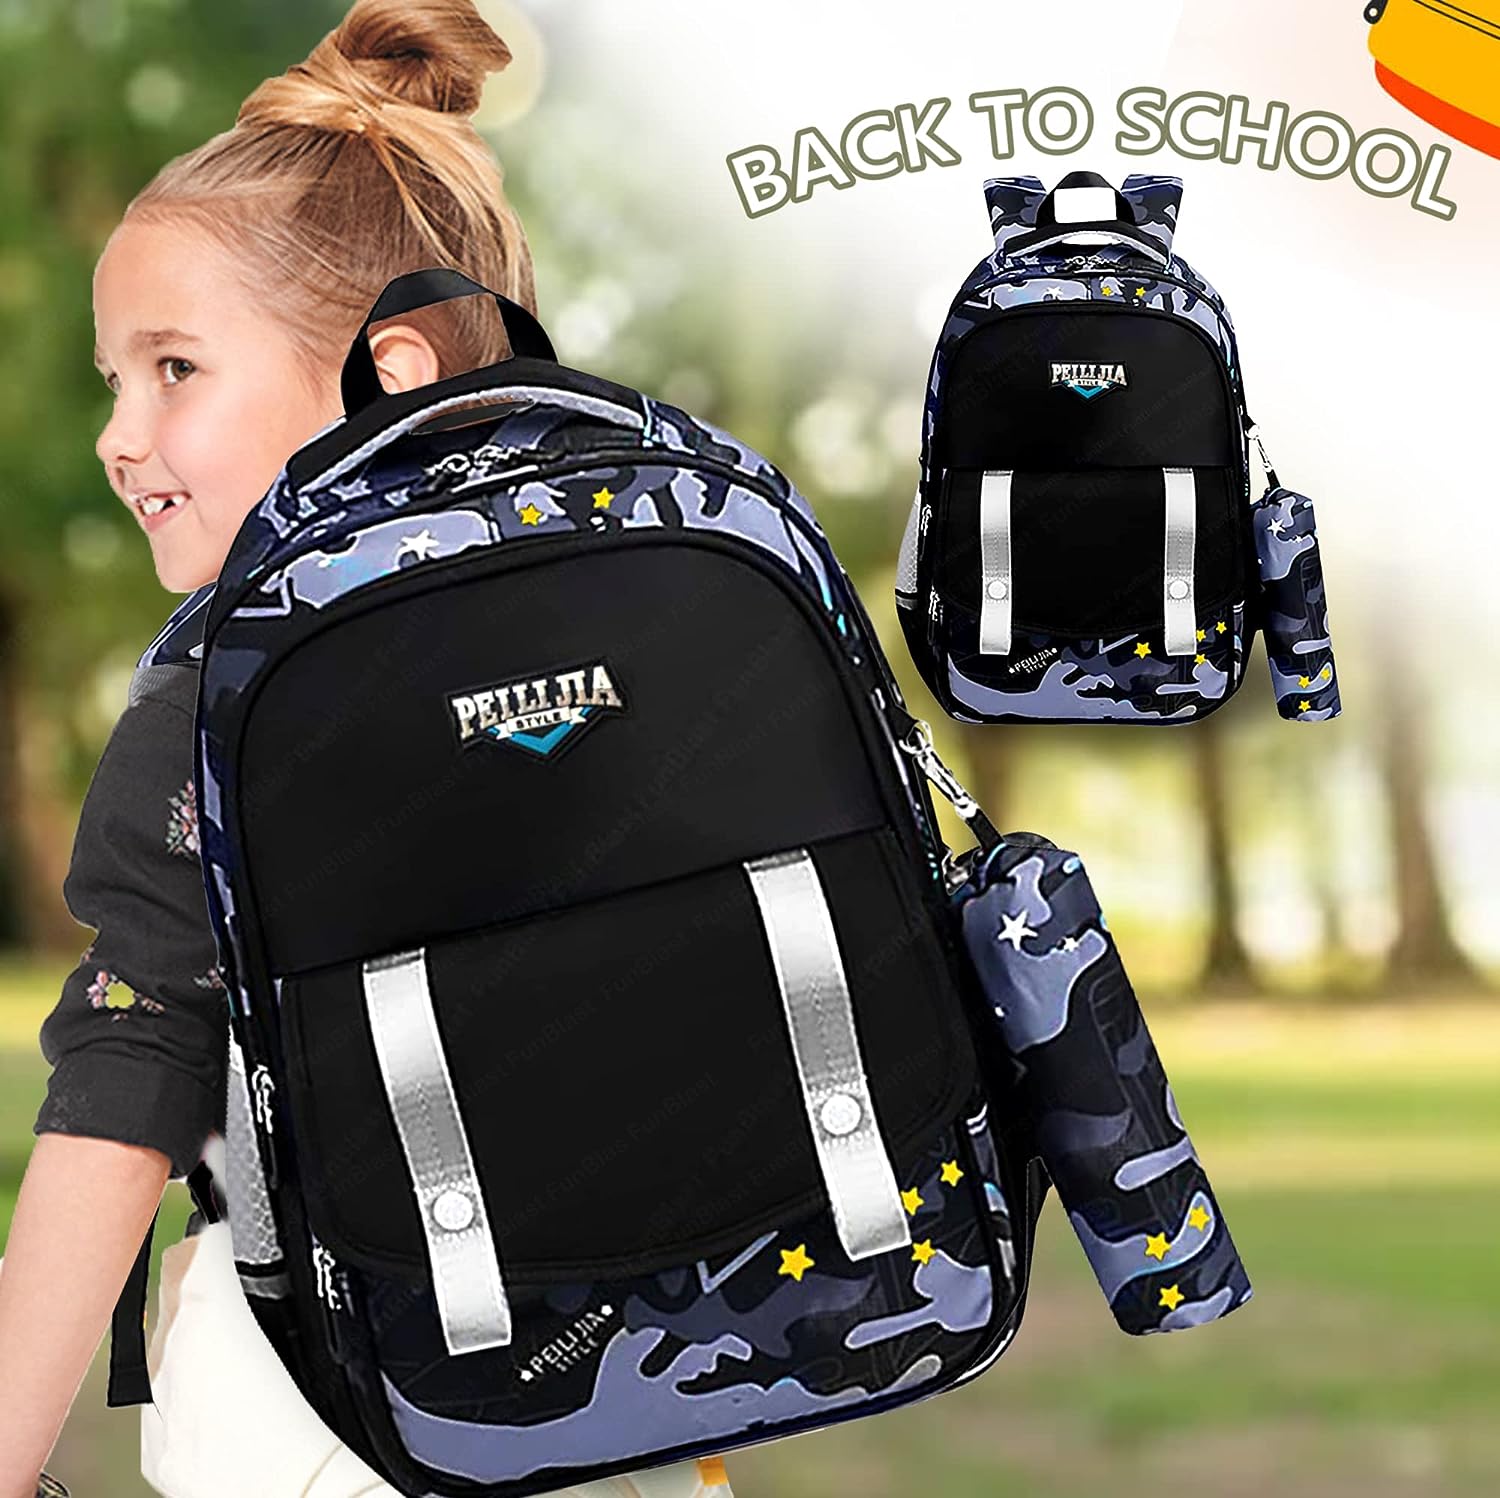 School Bags for Boys – College Bag, Casual Bag, School Bag, Backpack for Kids, Lightweight School Bags, Travel Bag, Picnic Bag (42 X 29 X 18 CM)